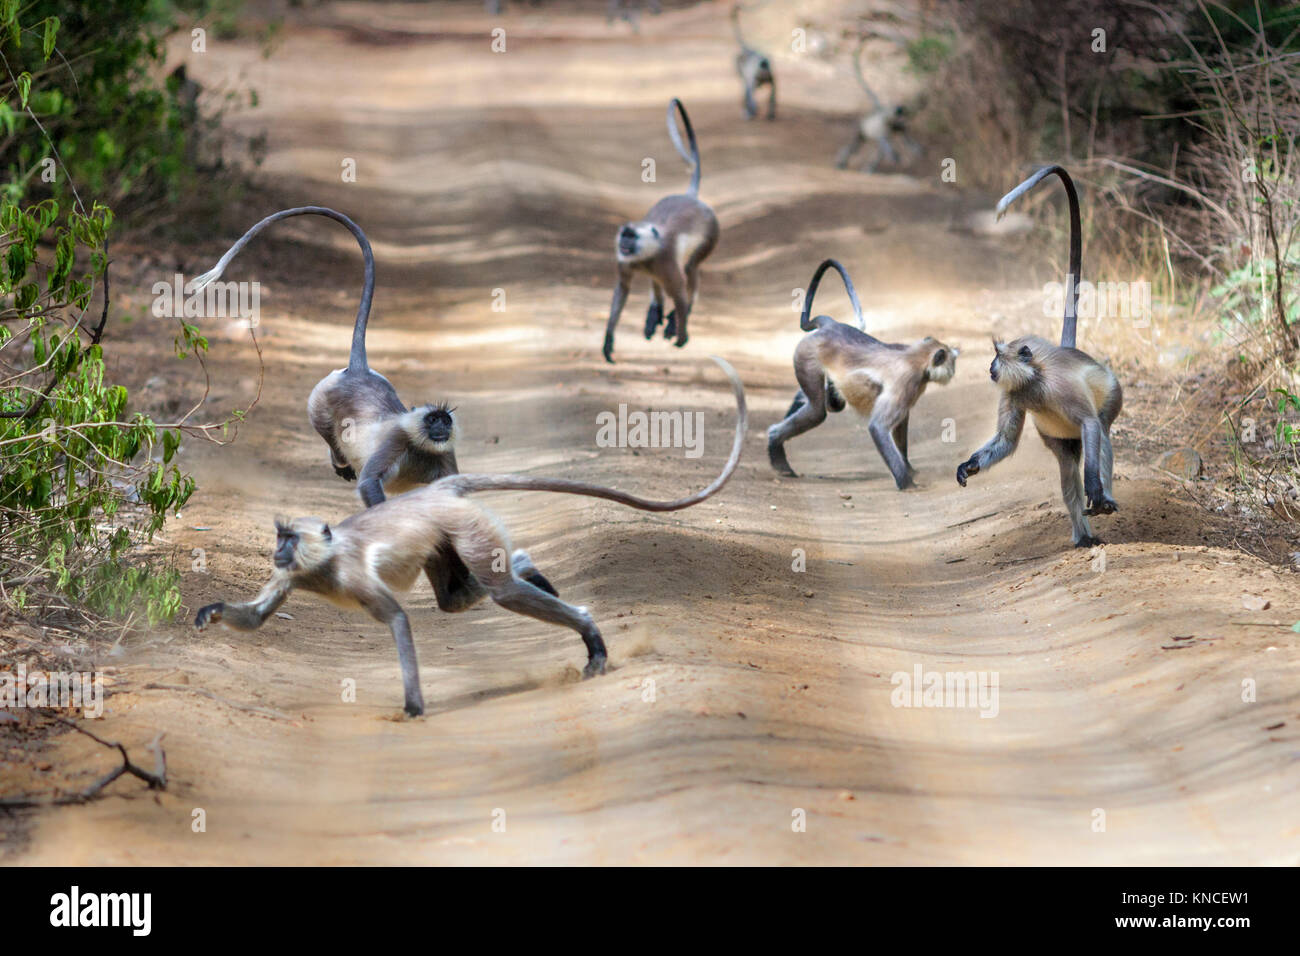 Group of Grey langurs or Hanuman langurs running jumping due to alarm call of Tiger around, at Ranthambhore.  ( Presbytis entellus ) Stock Photo